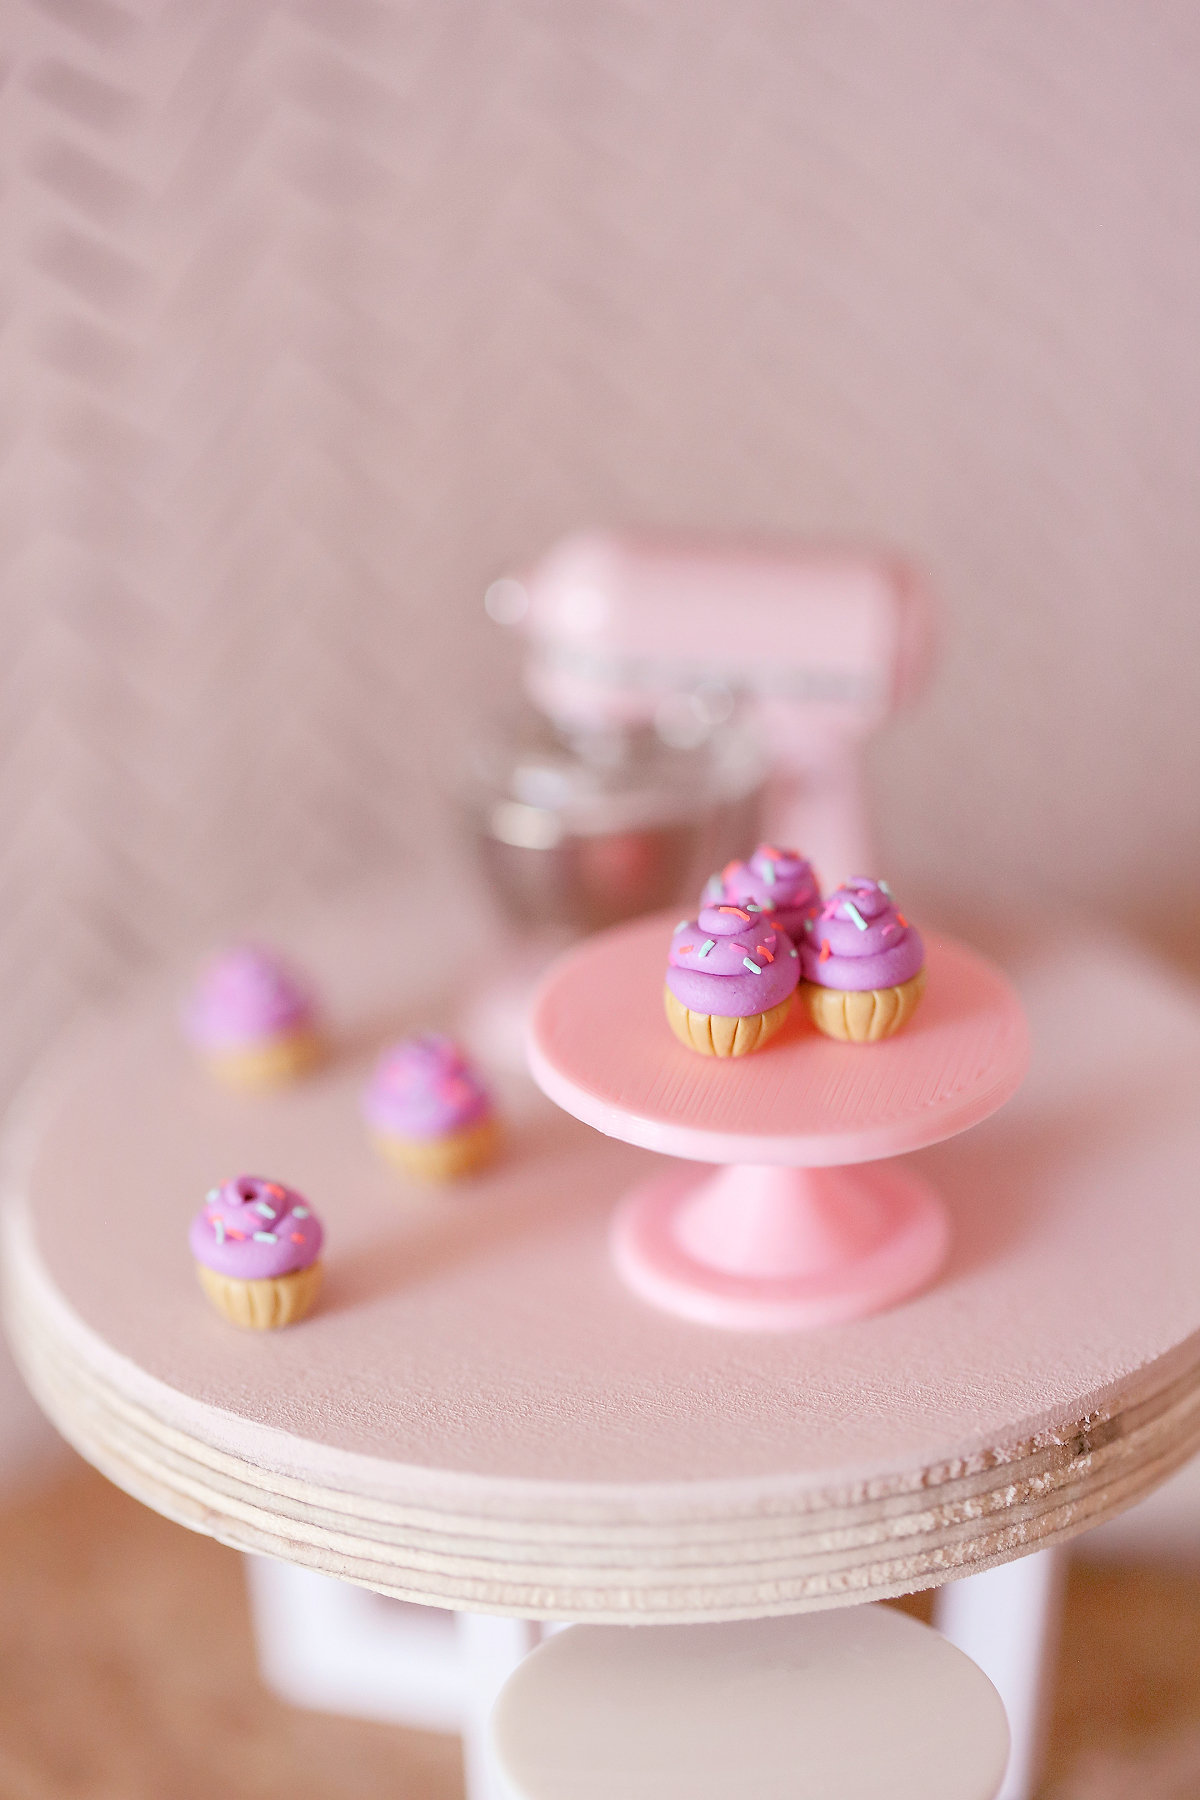 Modern Dollhouse food - Scale 1:12 miniature cupcakes